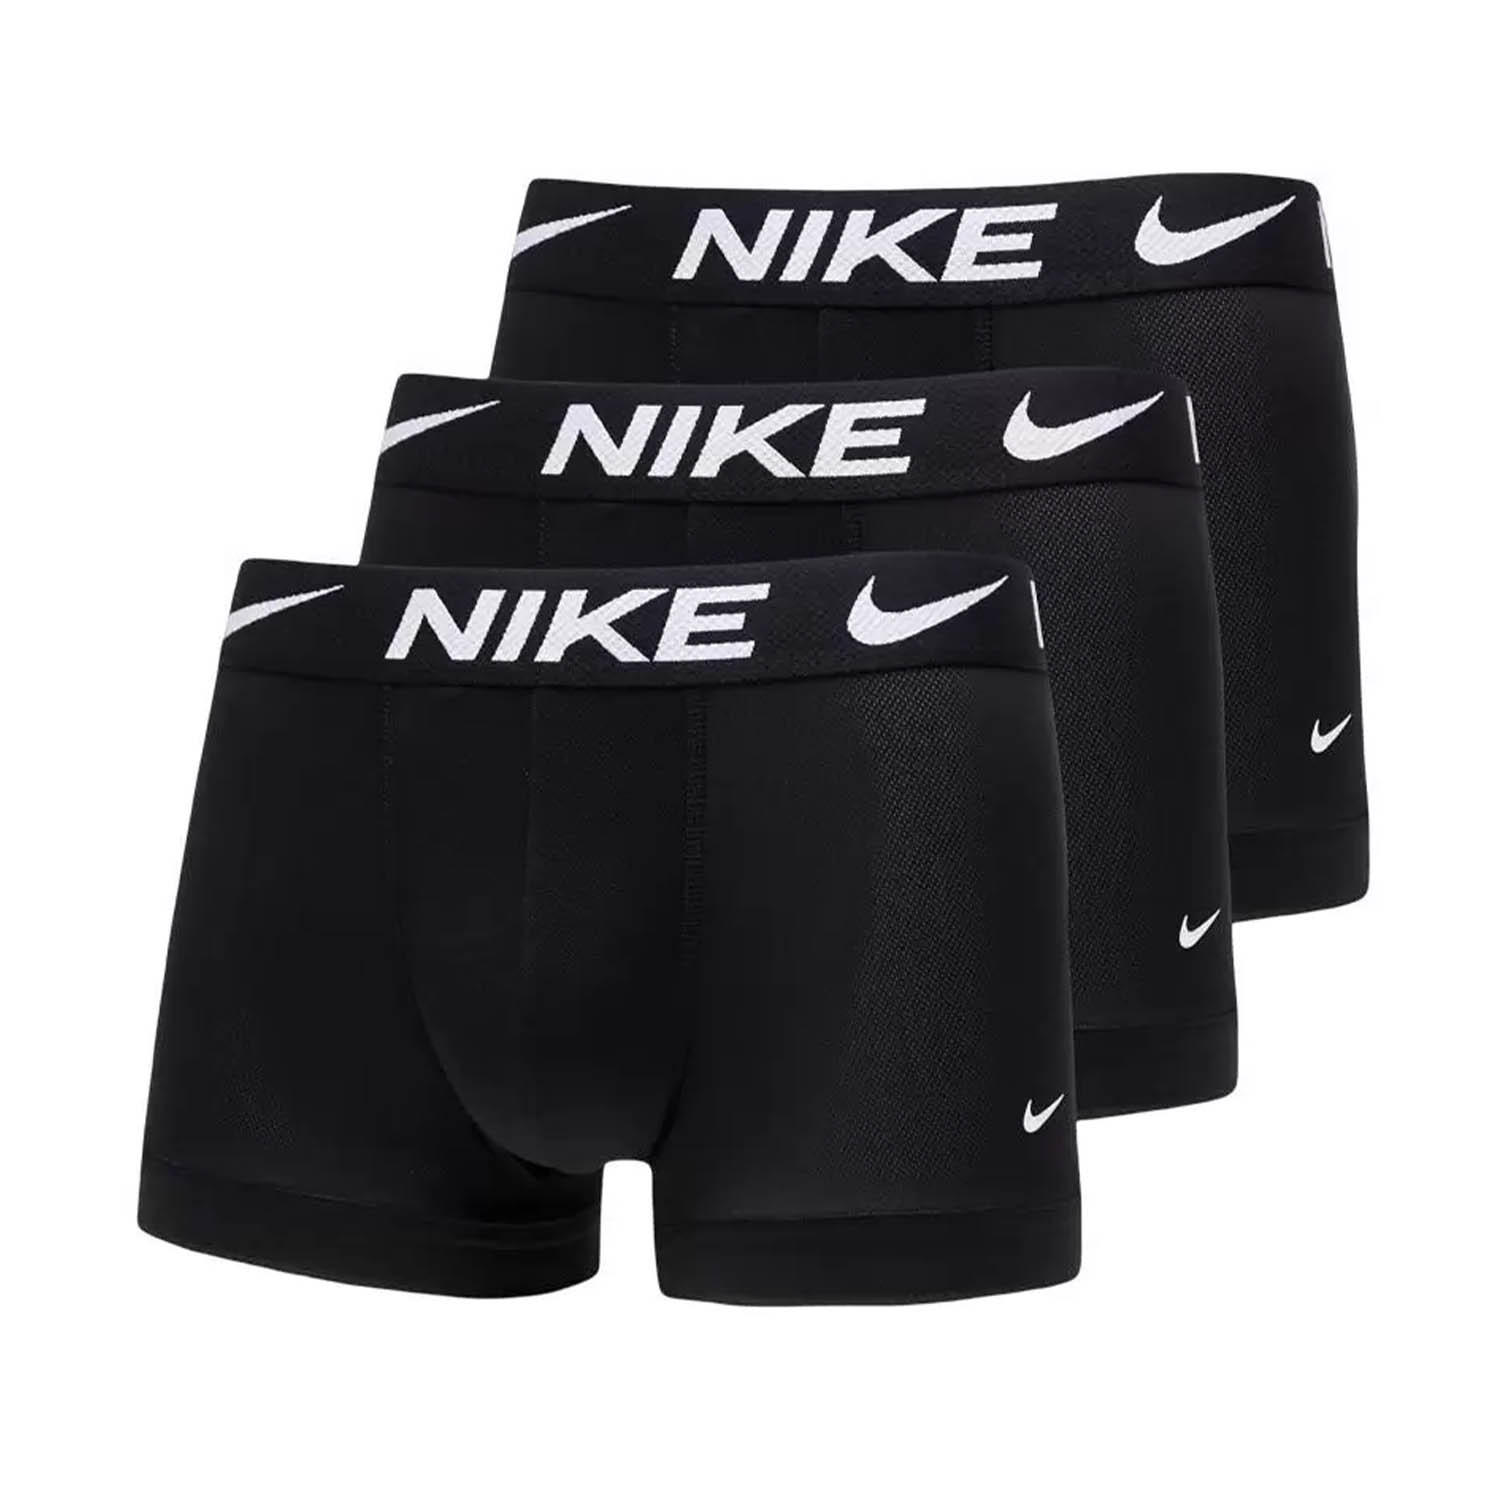 Nike Trunk x 3 Boxer - Black